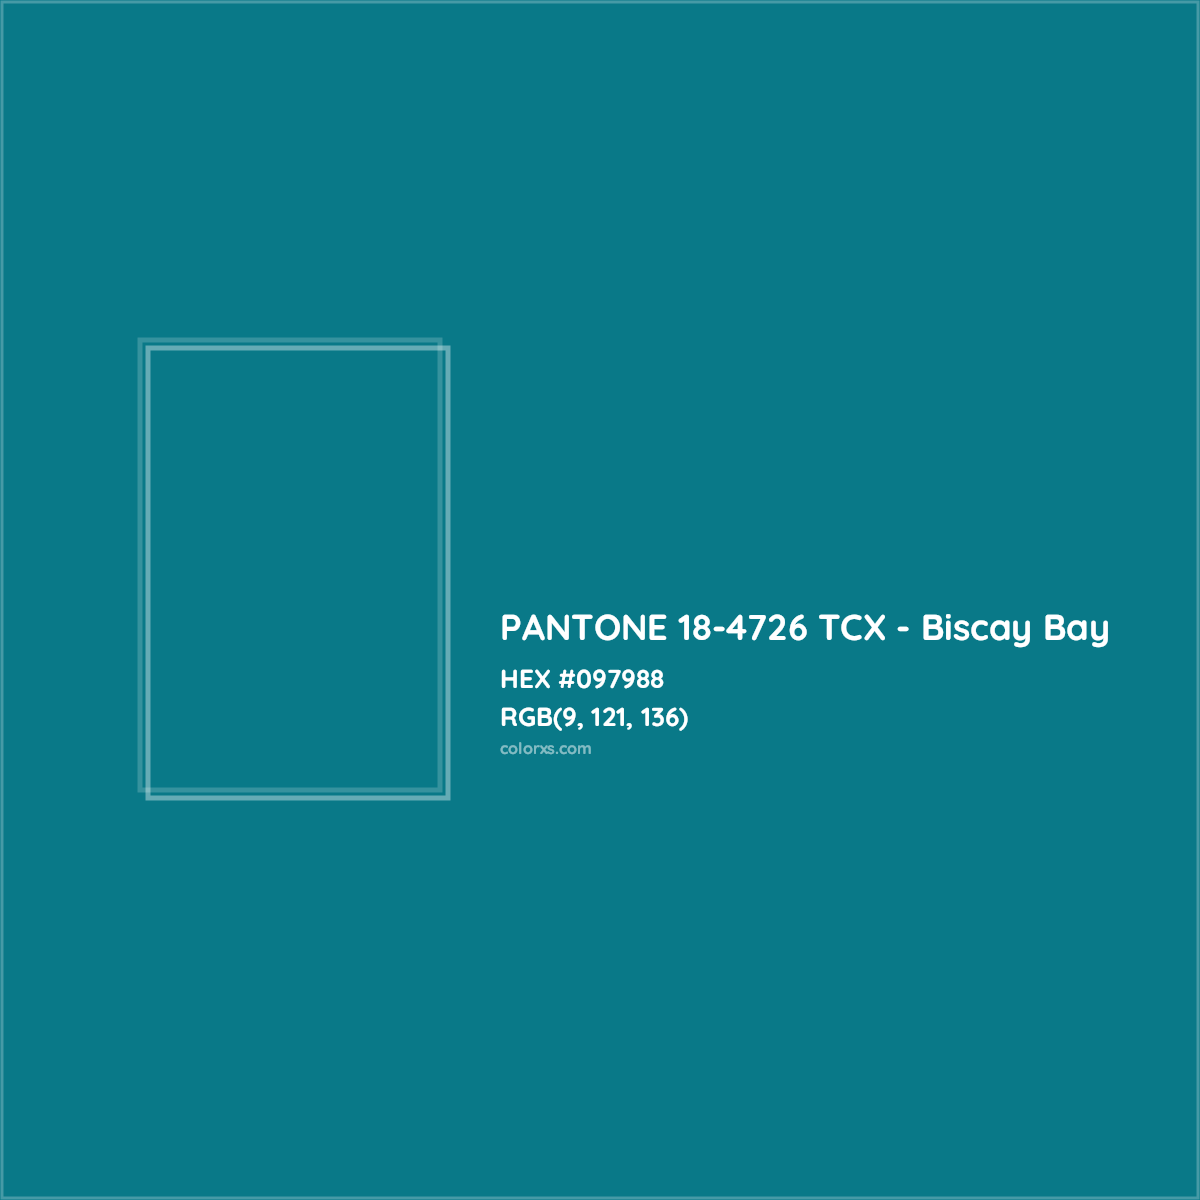 HEX #097988 PANTONE 18-4726 TCX - Biscay Bay CMS Pantone TCX - Color Code